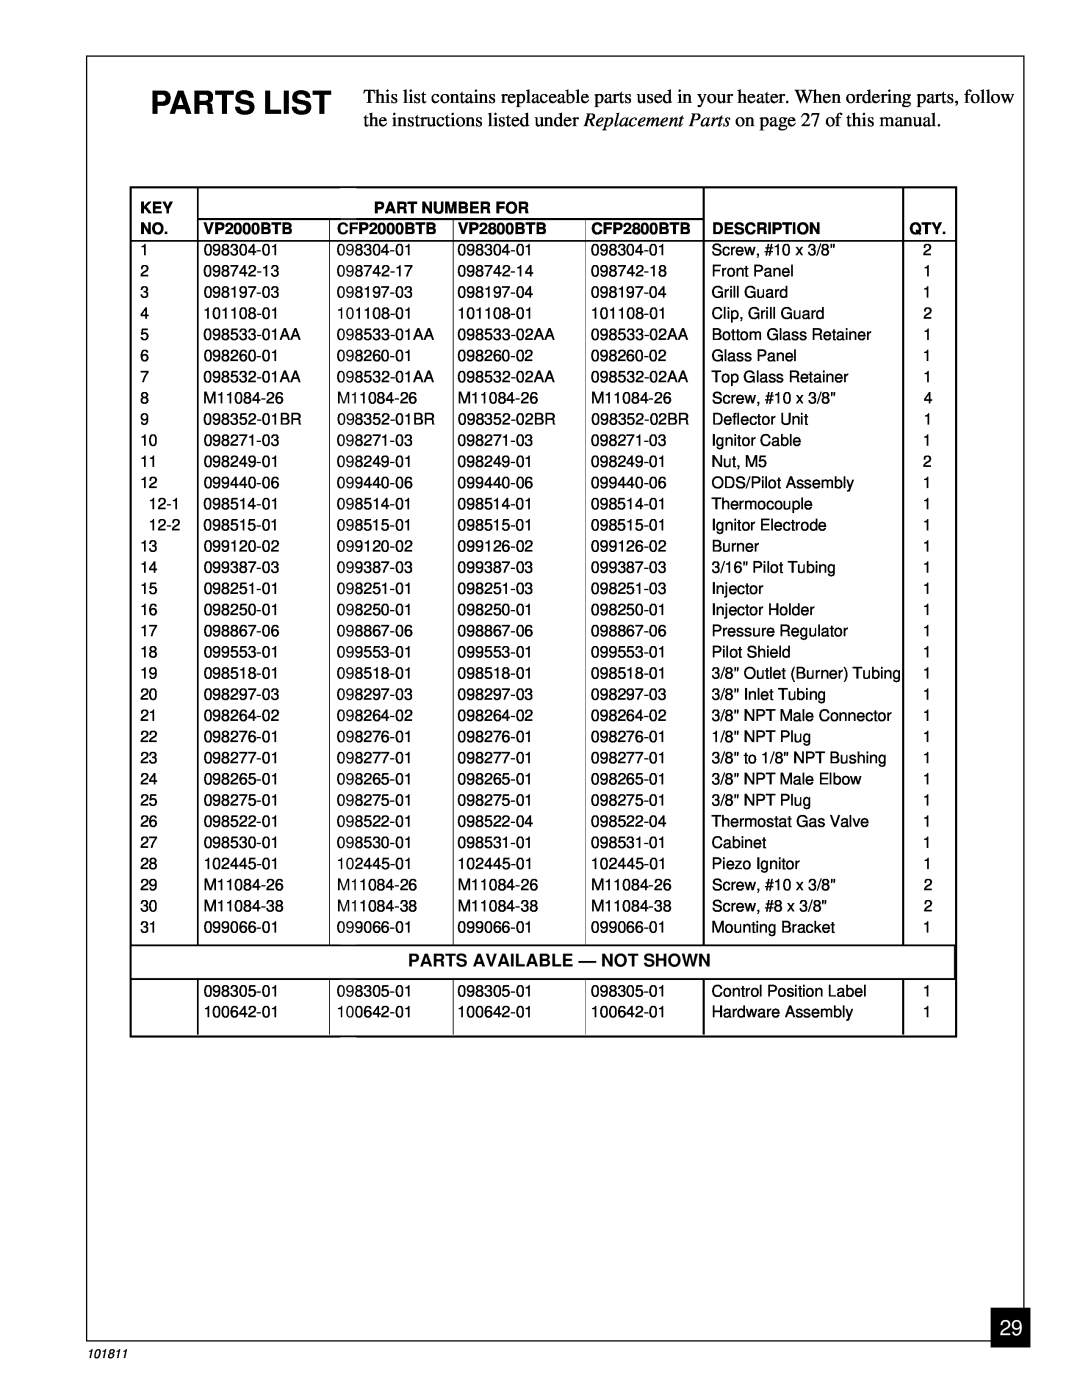 Desa 101811-01C.pdf installation manual Parts List, Parts Available - Not Shown 